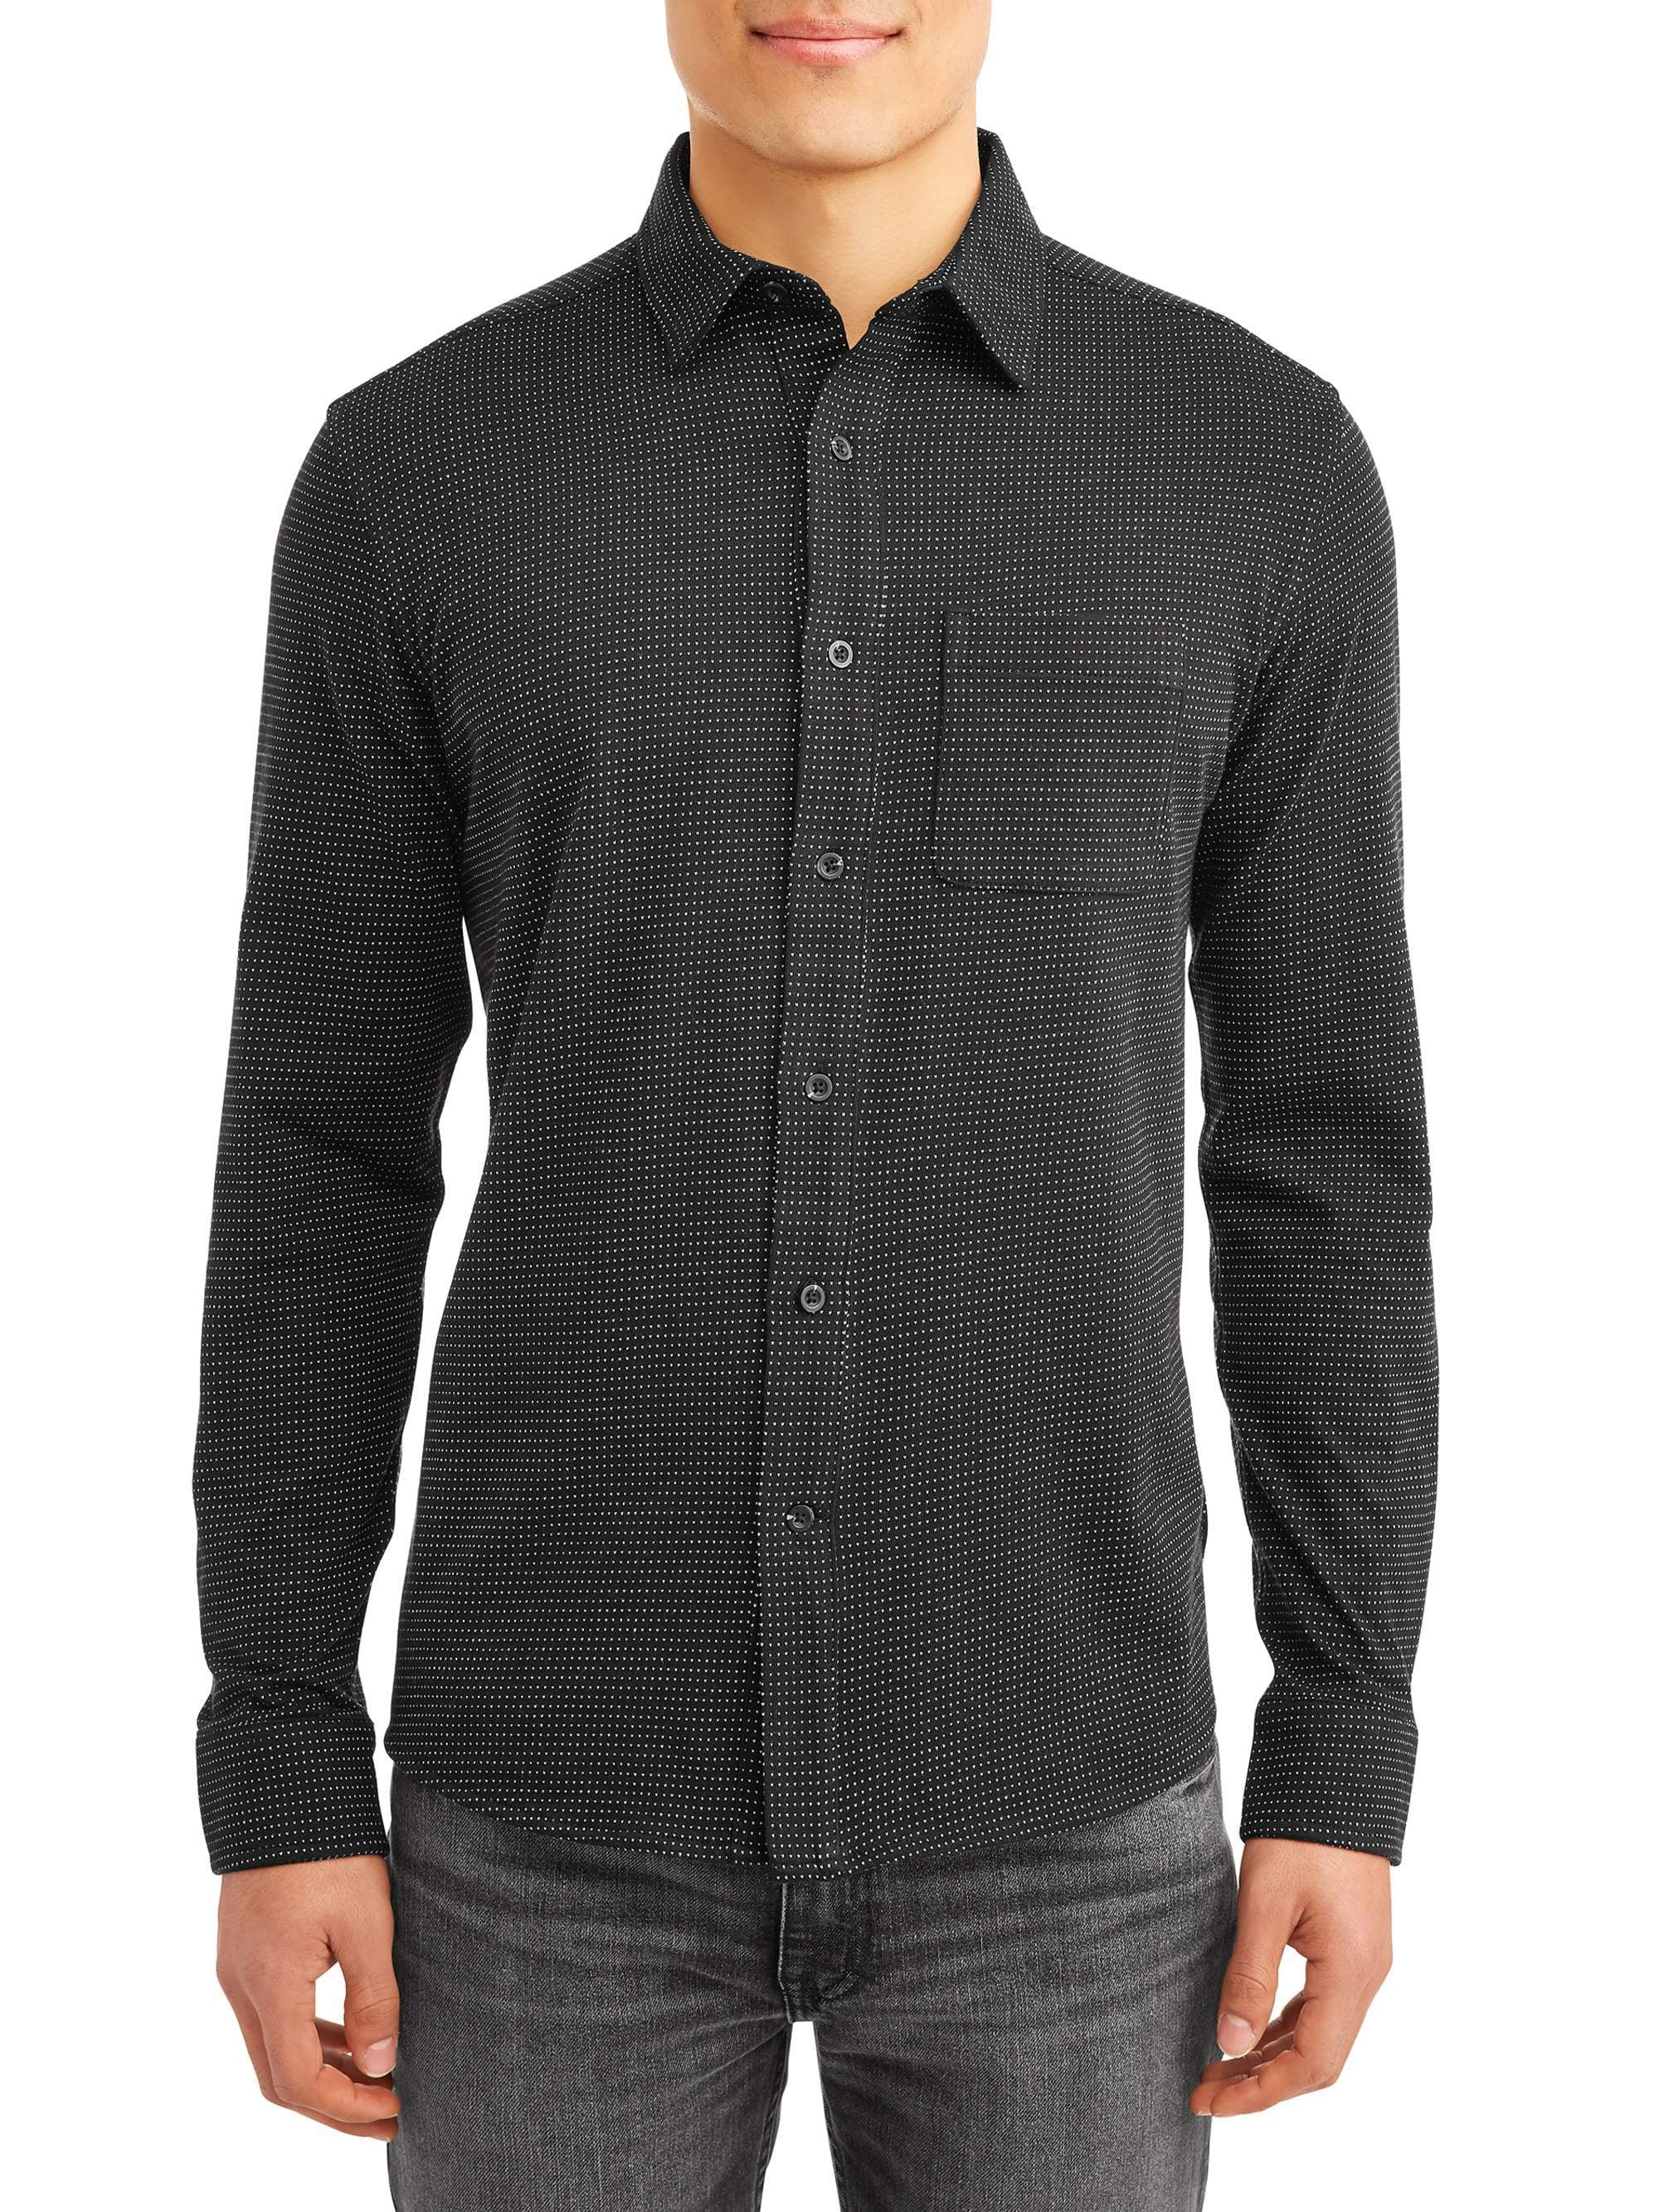 George Mens Long Sleeve Knit Button Down Shirt up to 2XL - Walmart.com